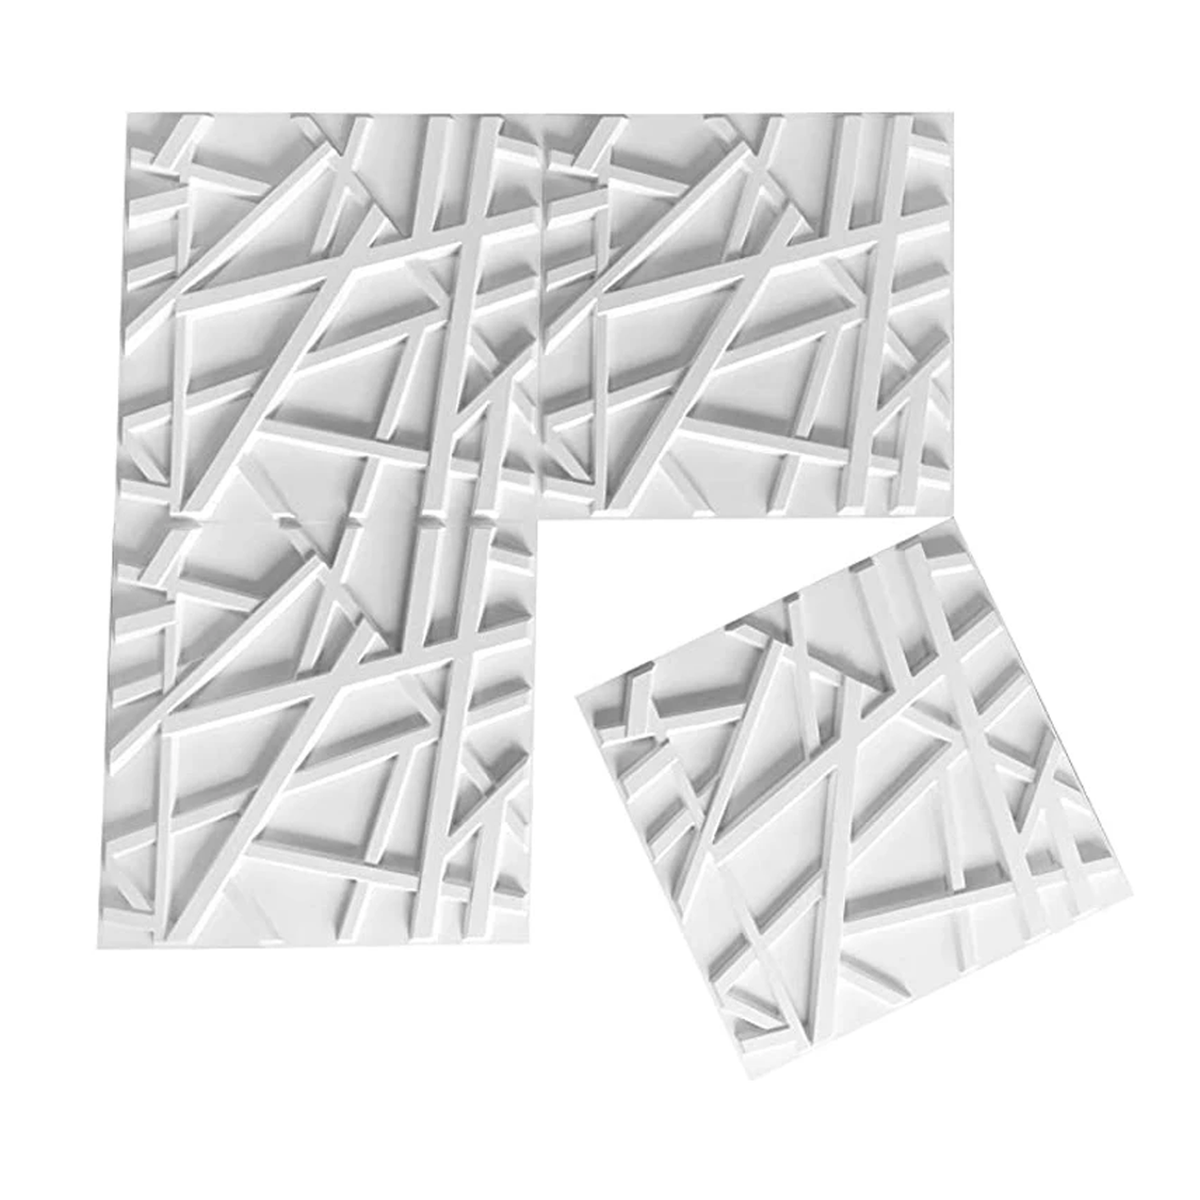 Geometrisches 3D-Wandpaneel – Diamantgeschnitztes Design – 50 x 50 cm